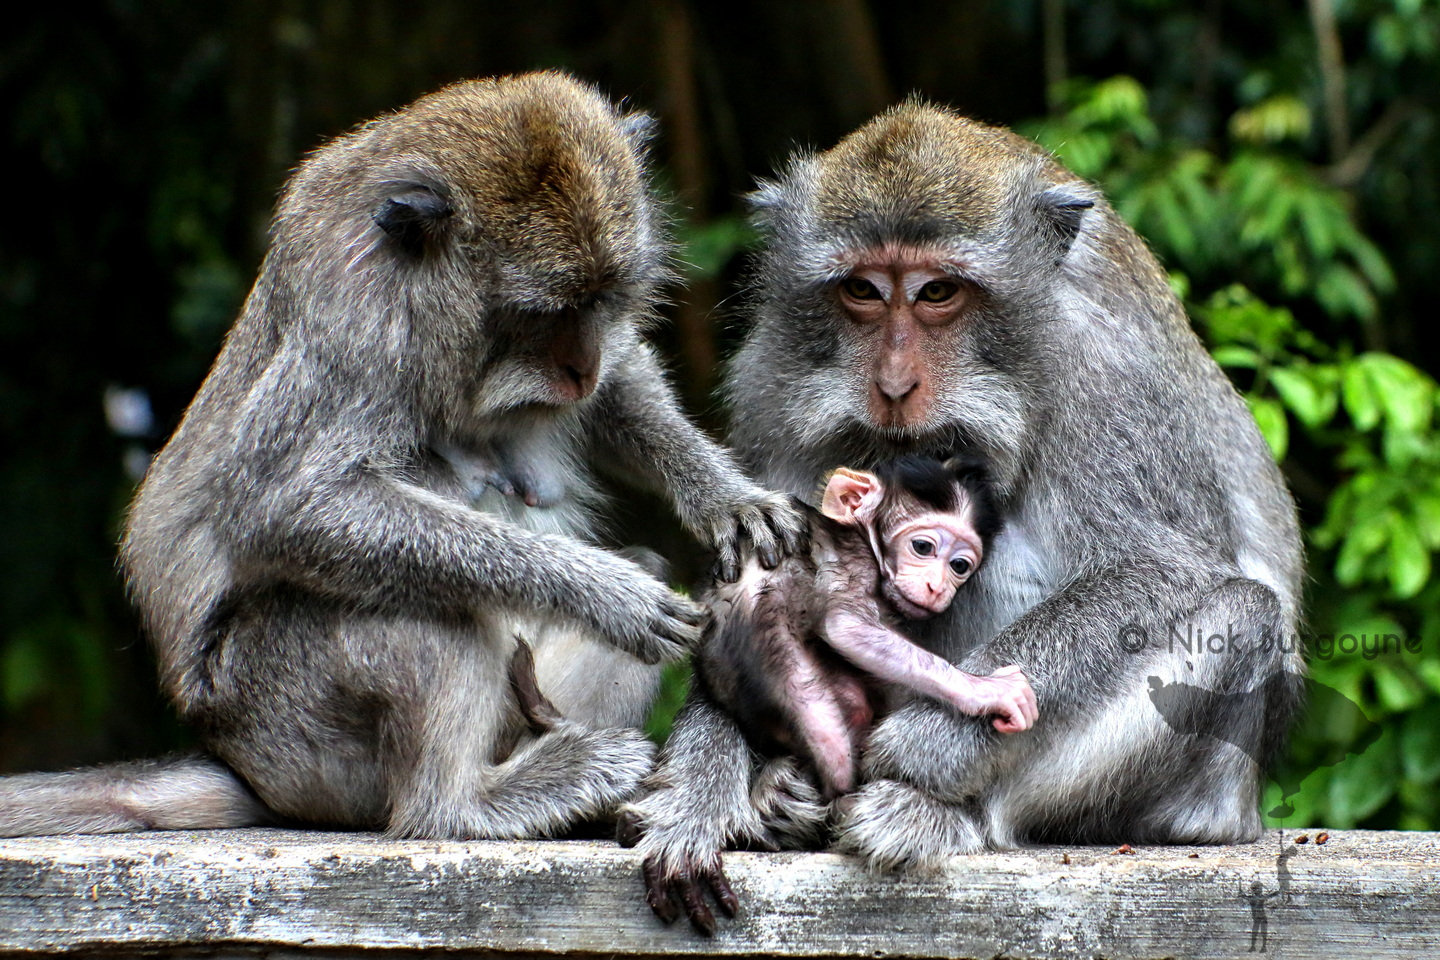 The Monkeys Who Care - Alas Kedaton 